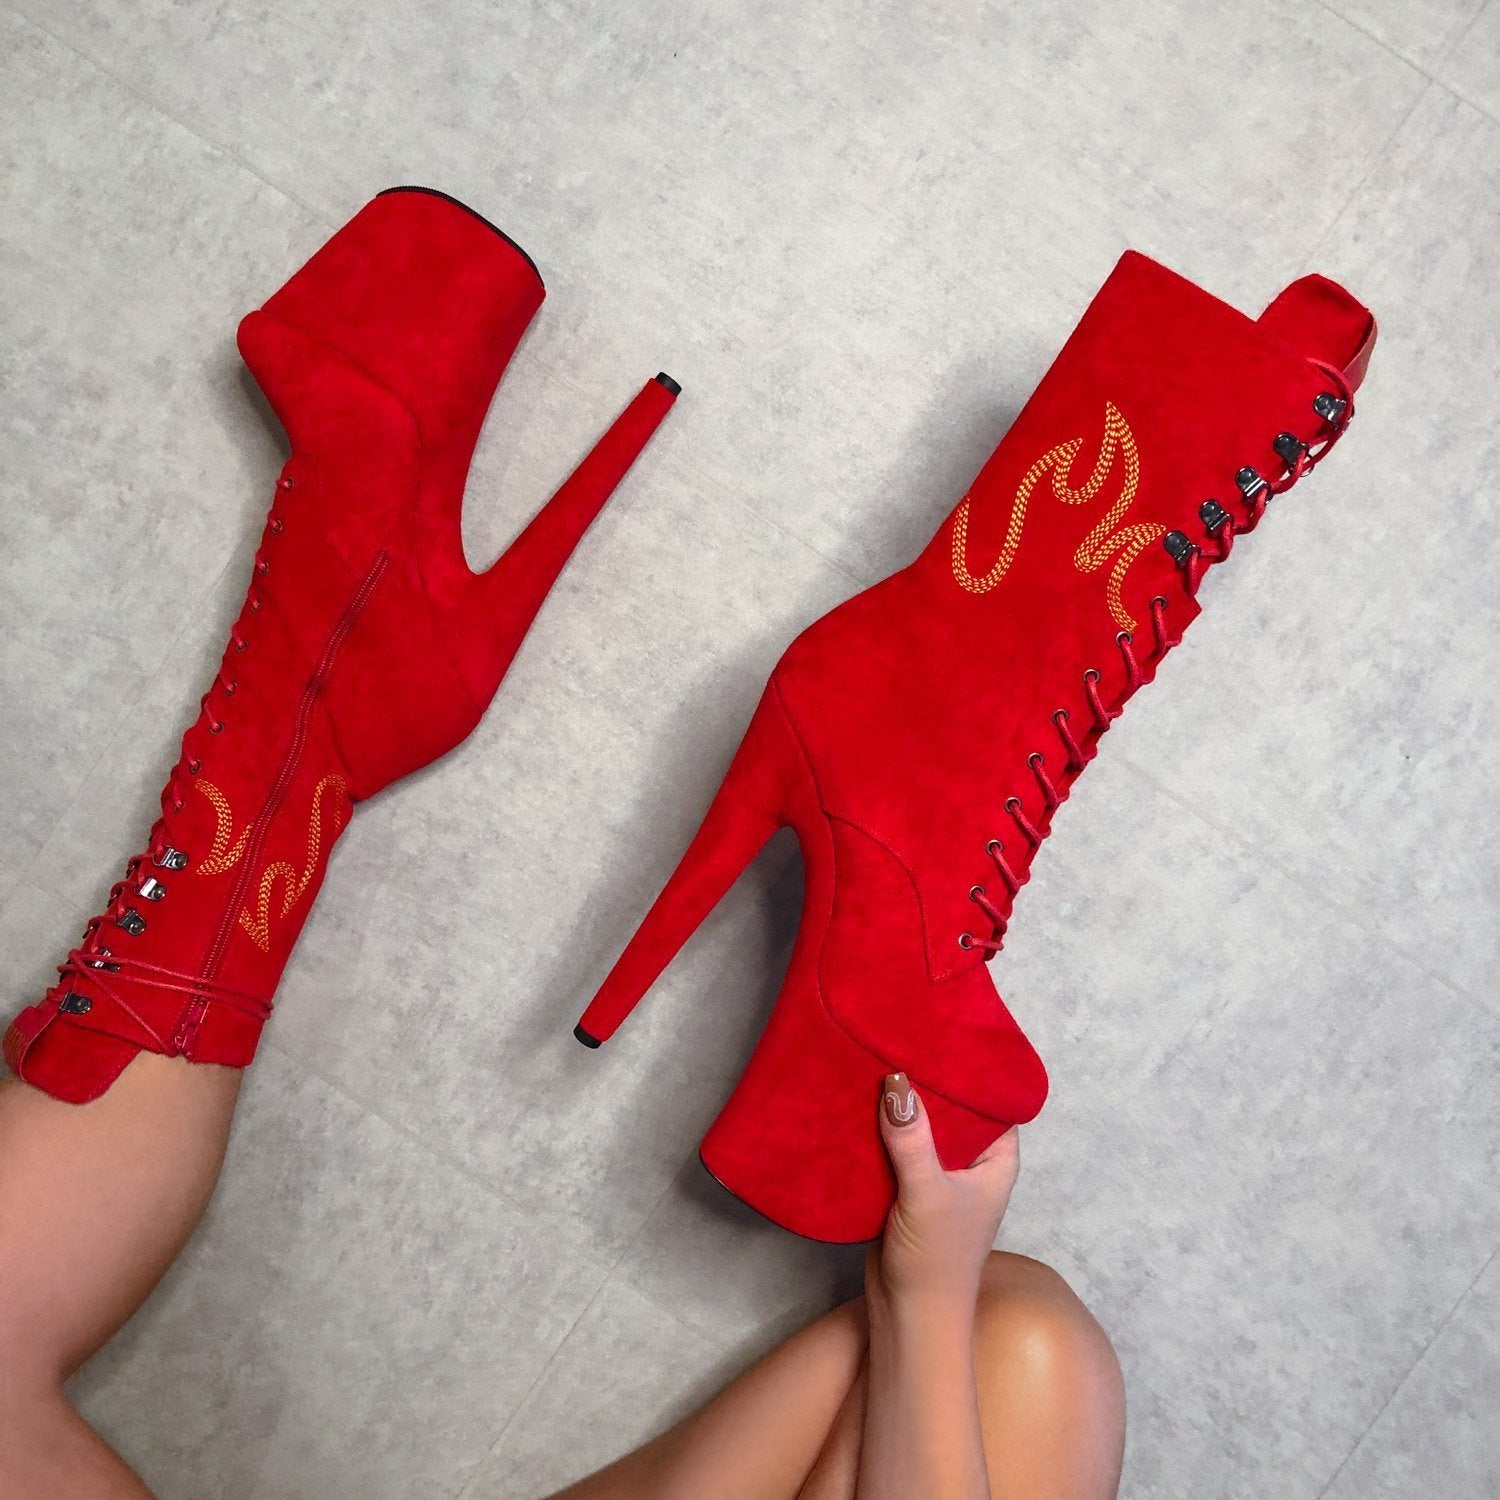 HellGirl Red/Yellow Front Lace - 8 INCH, stripper shoe, stripper heel, pole heel, not a pleaser, platform, dancer, pole dance, floor work